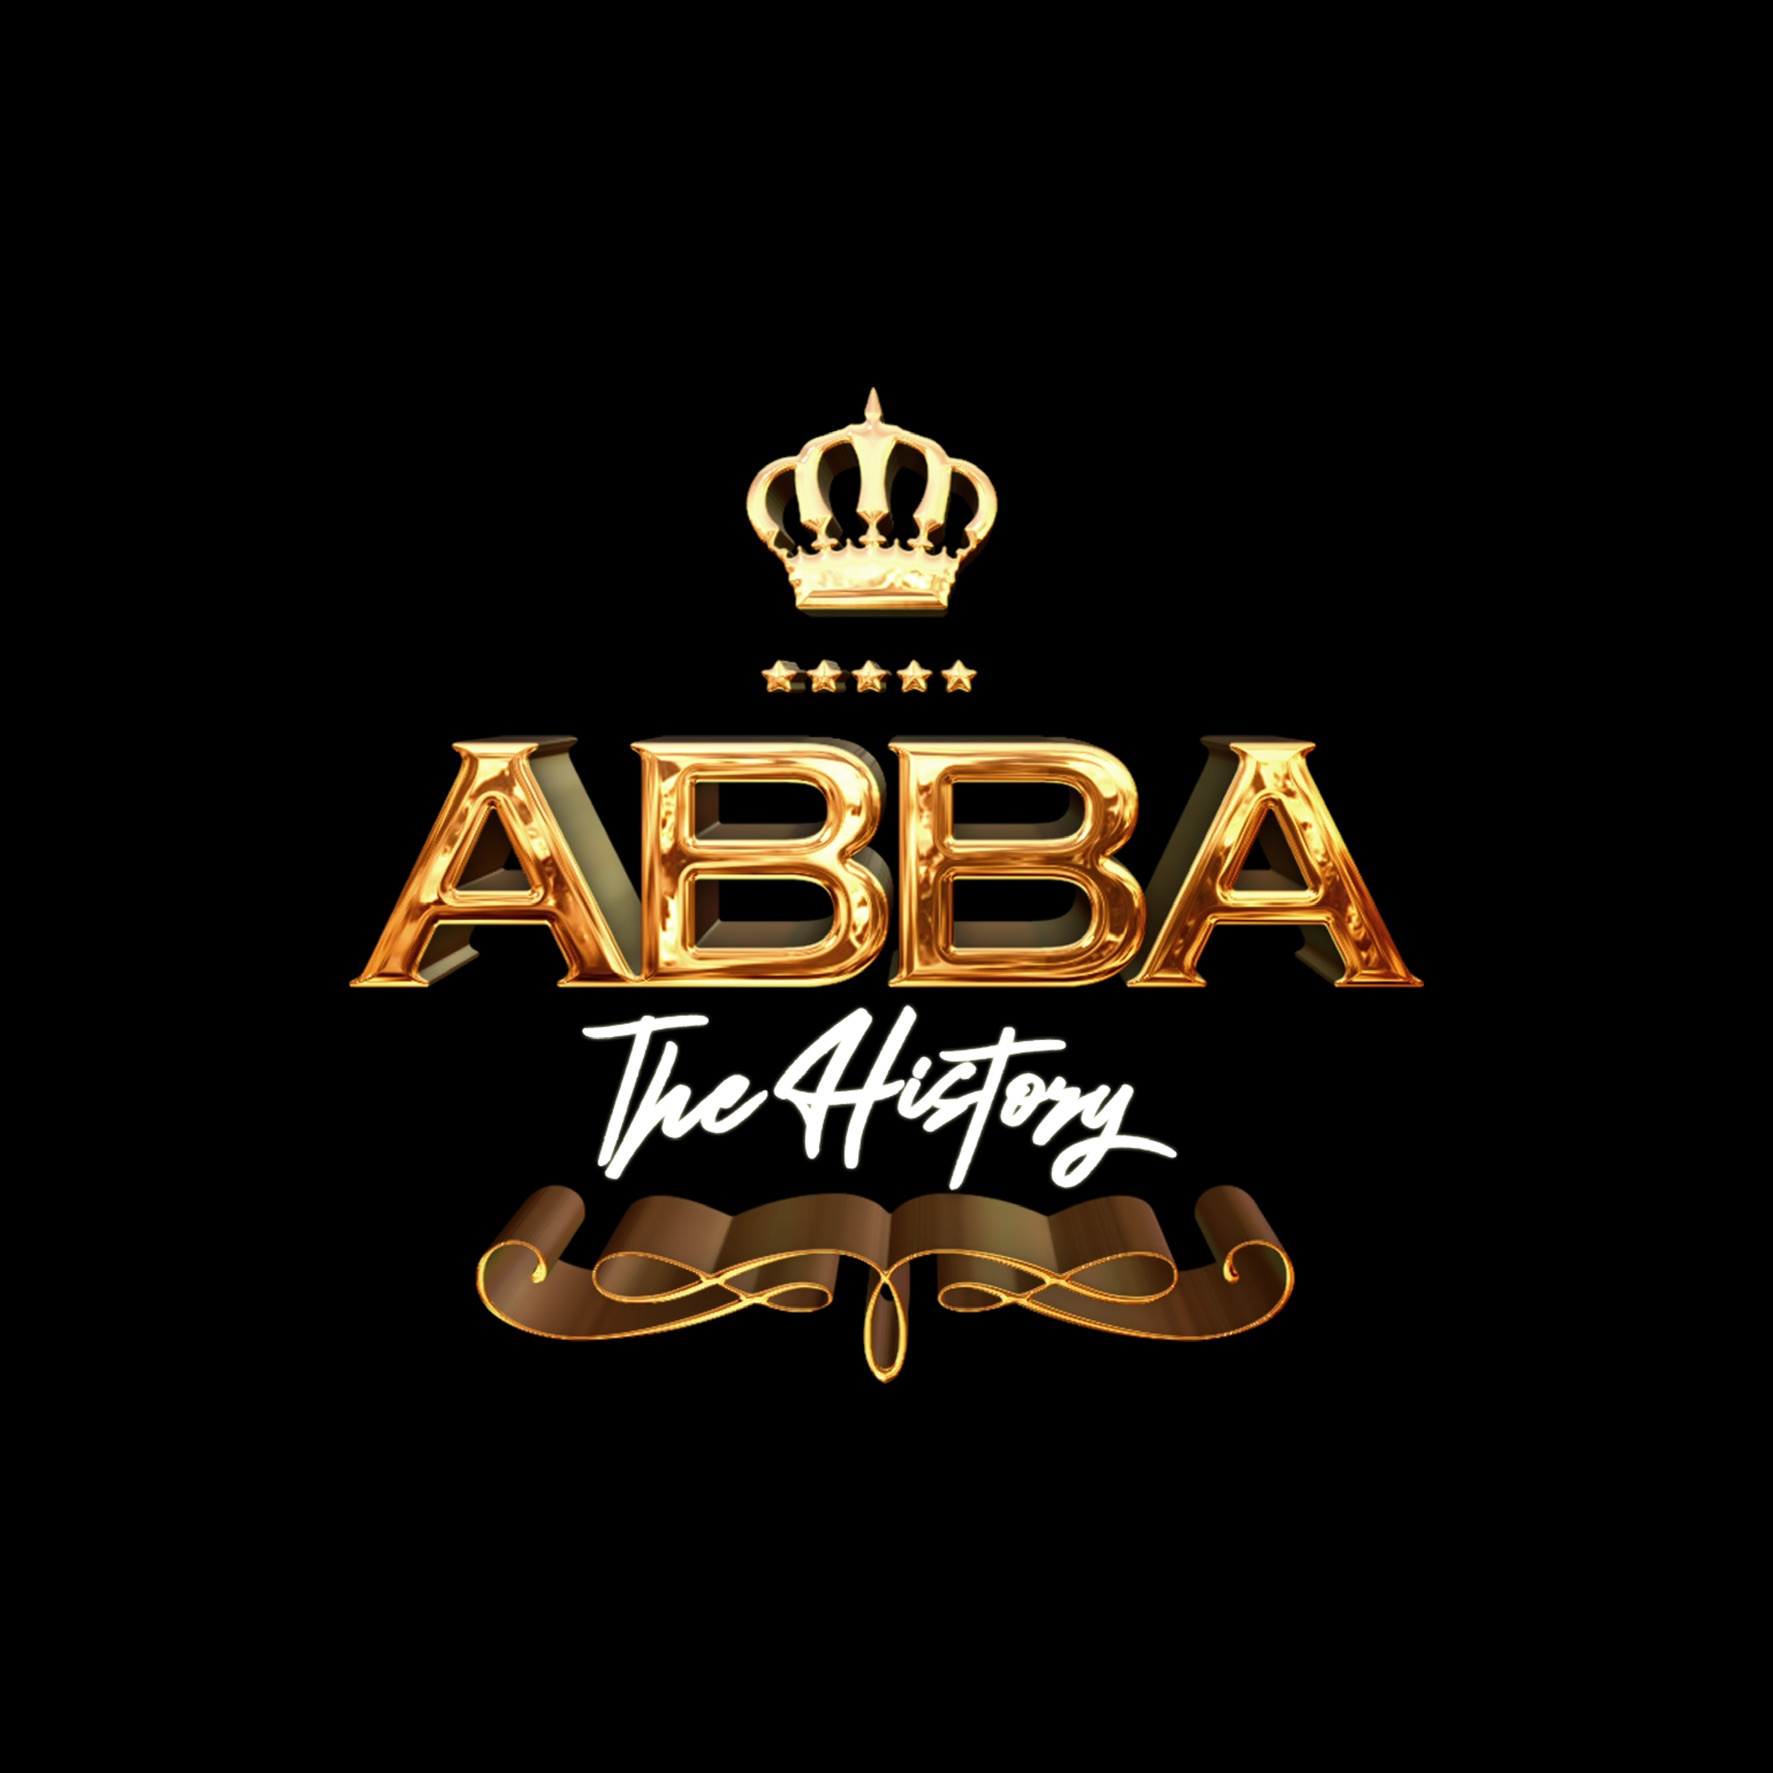 “ABBA The History” volta a BH com novo show “Voyage in Concert”